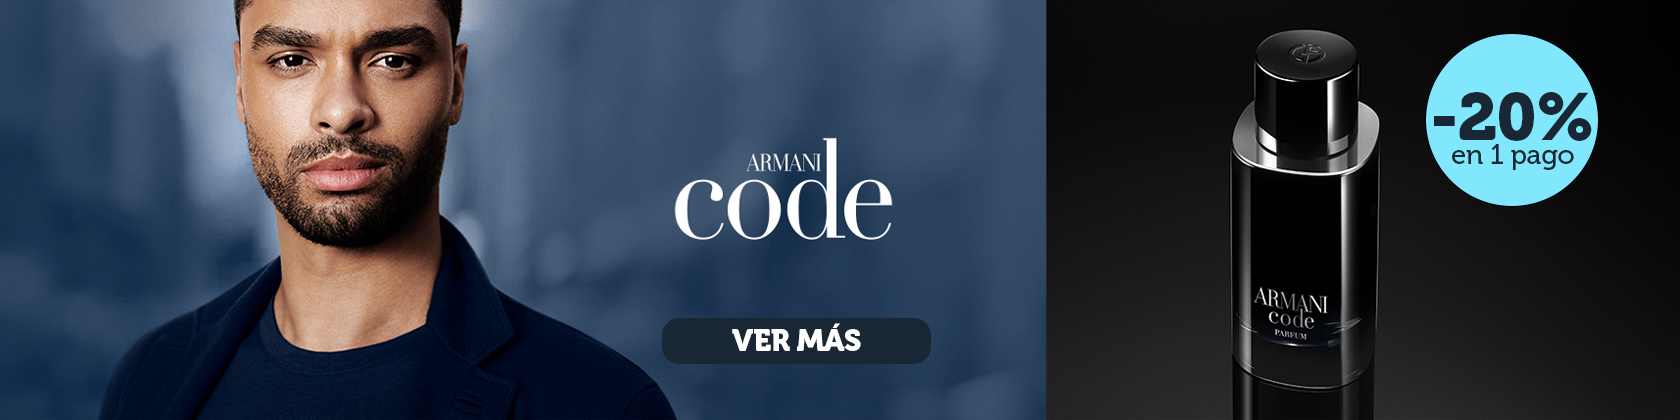 Banner desktop - armani code